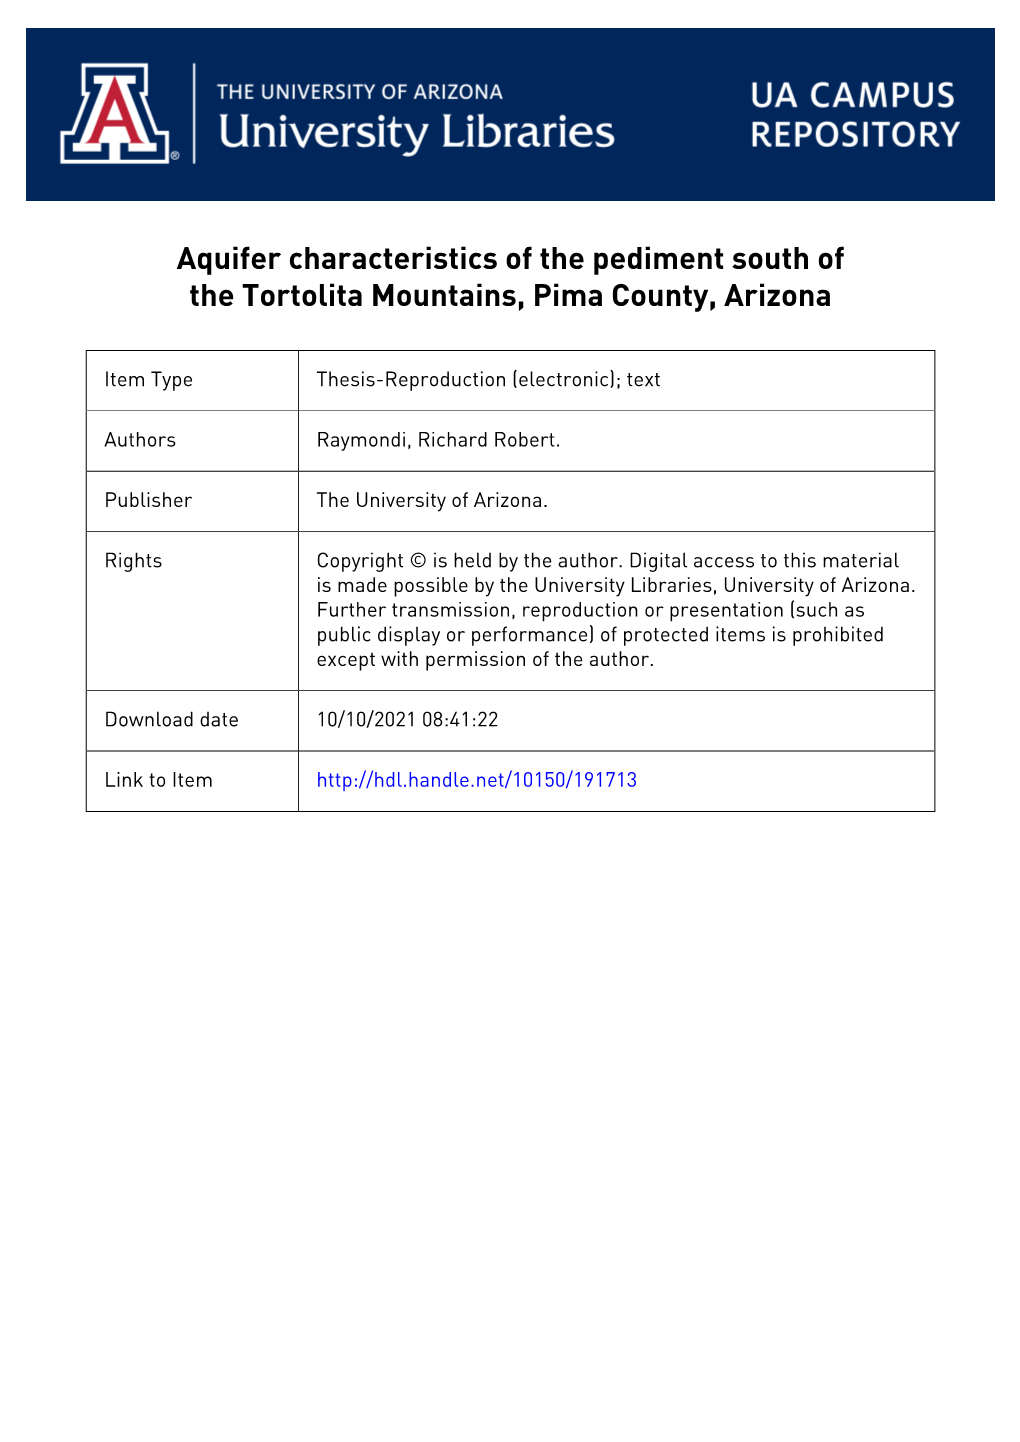 Aquifer Characteristics of the Pediment South of the Tortolita Mountains, Pima County, Arizona